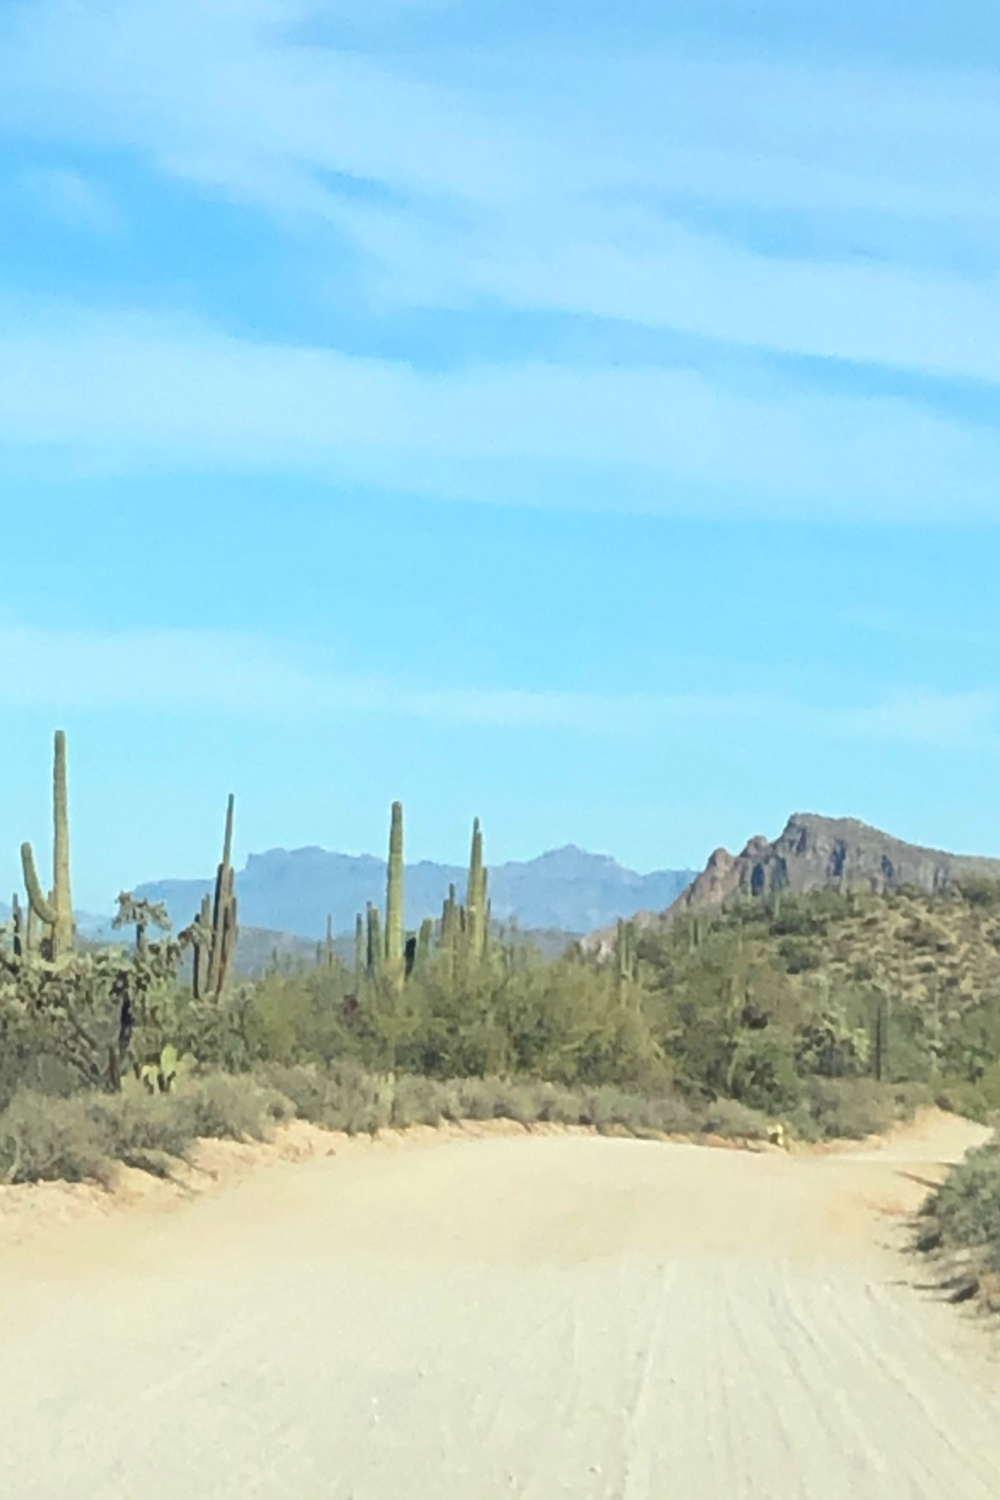 Arizona and Southwest landscape beauty with Saguaro cacti, mountains, and desert plants - Hello Lovely Studio.